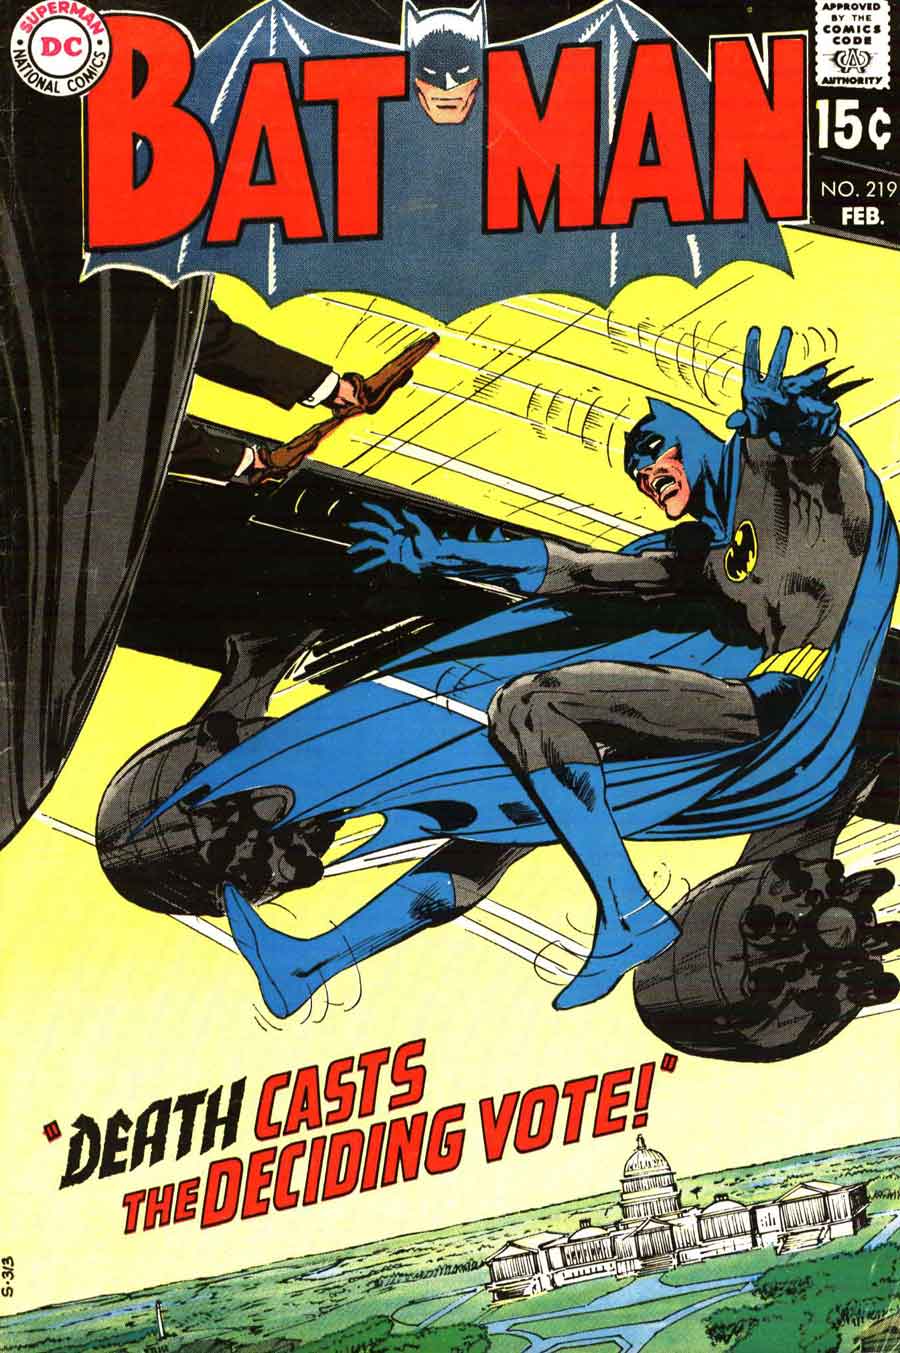 Batman #219 bronze age 1970s dc comic book cover art by Neal Adams